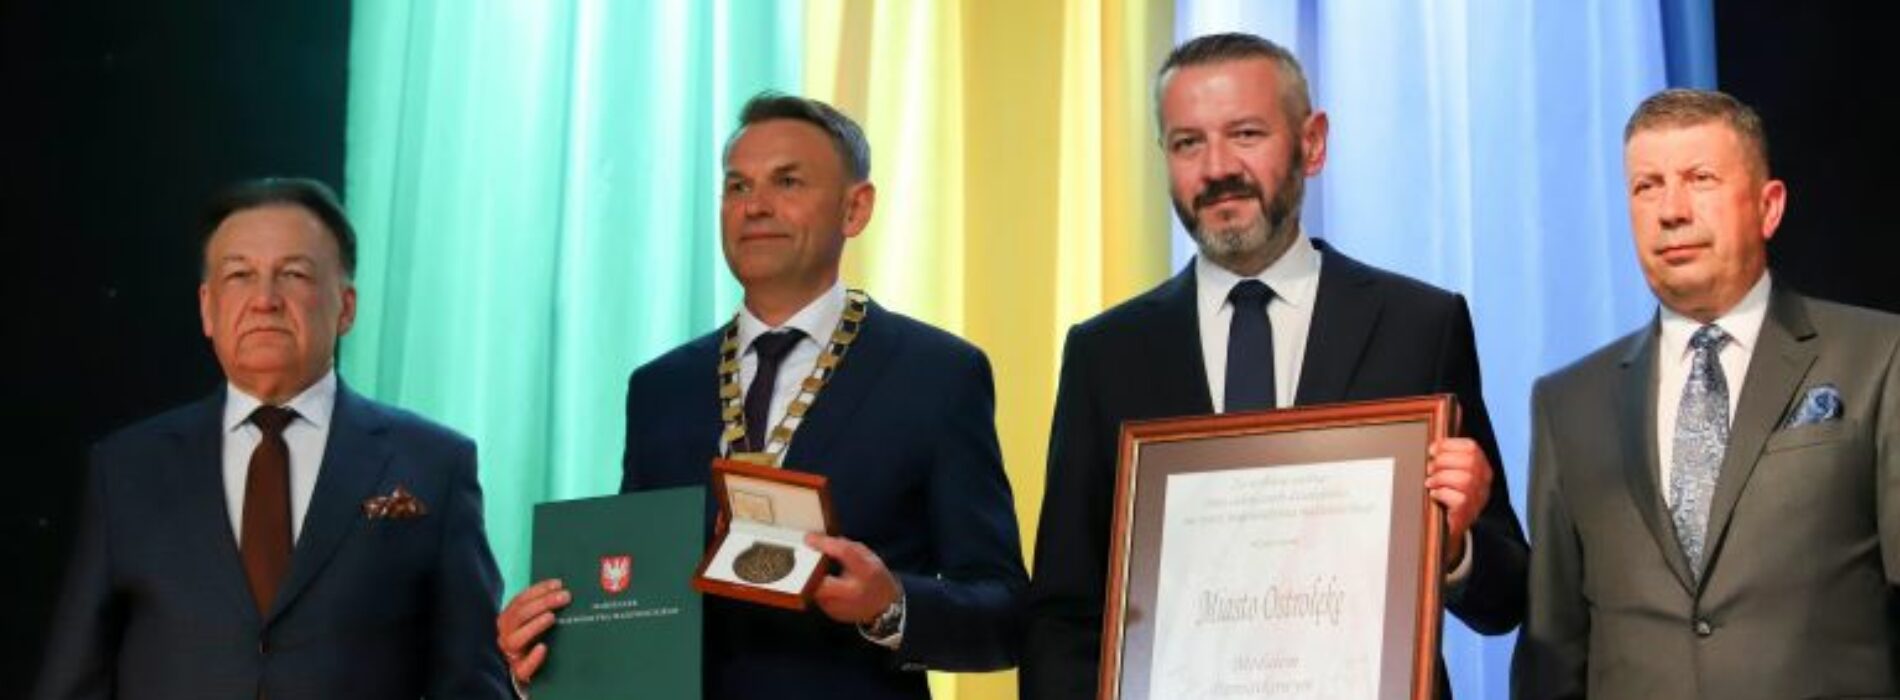 Medal Pro Masovia dla Miasta Ostrołęki